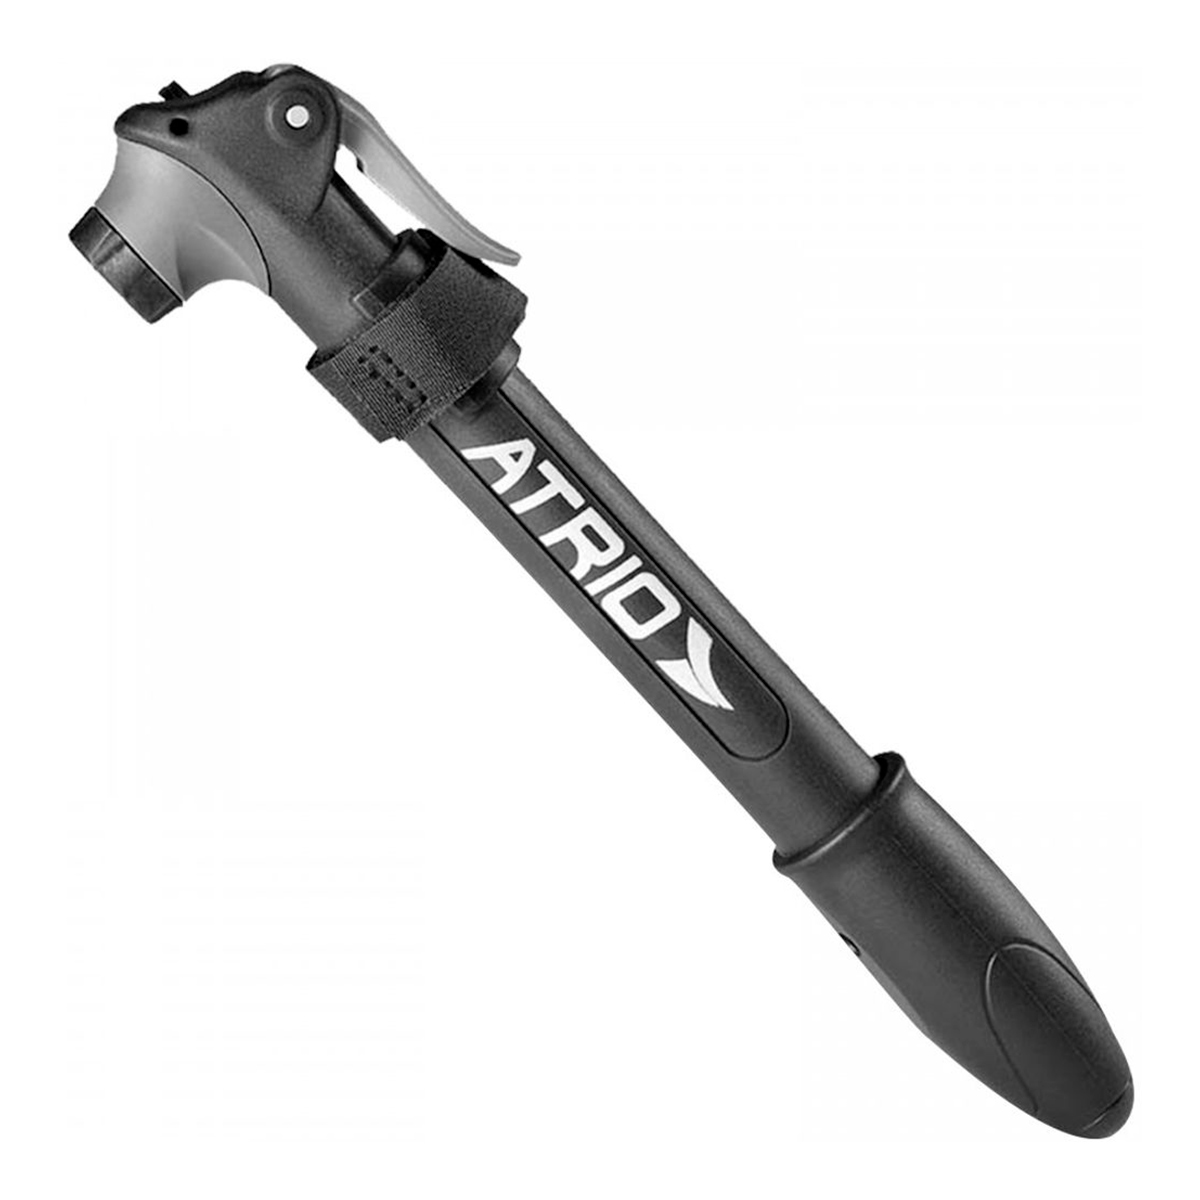 Bomba de Ar para Bicicleta - para válvula Presta ou Schreder - com Velcro - Multilaser Atrio BI143